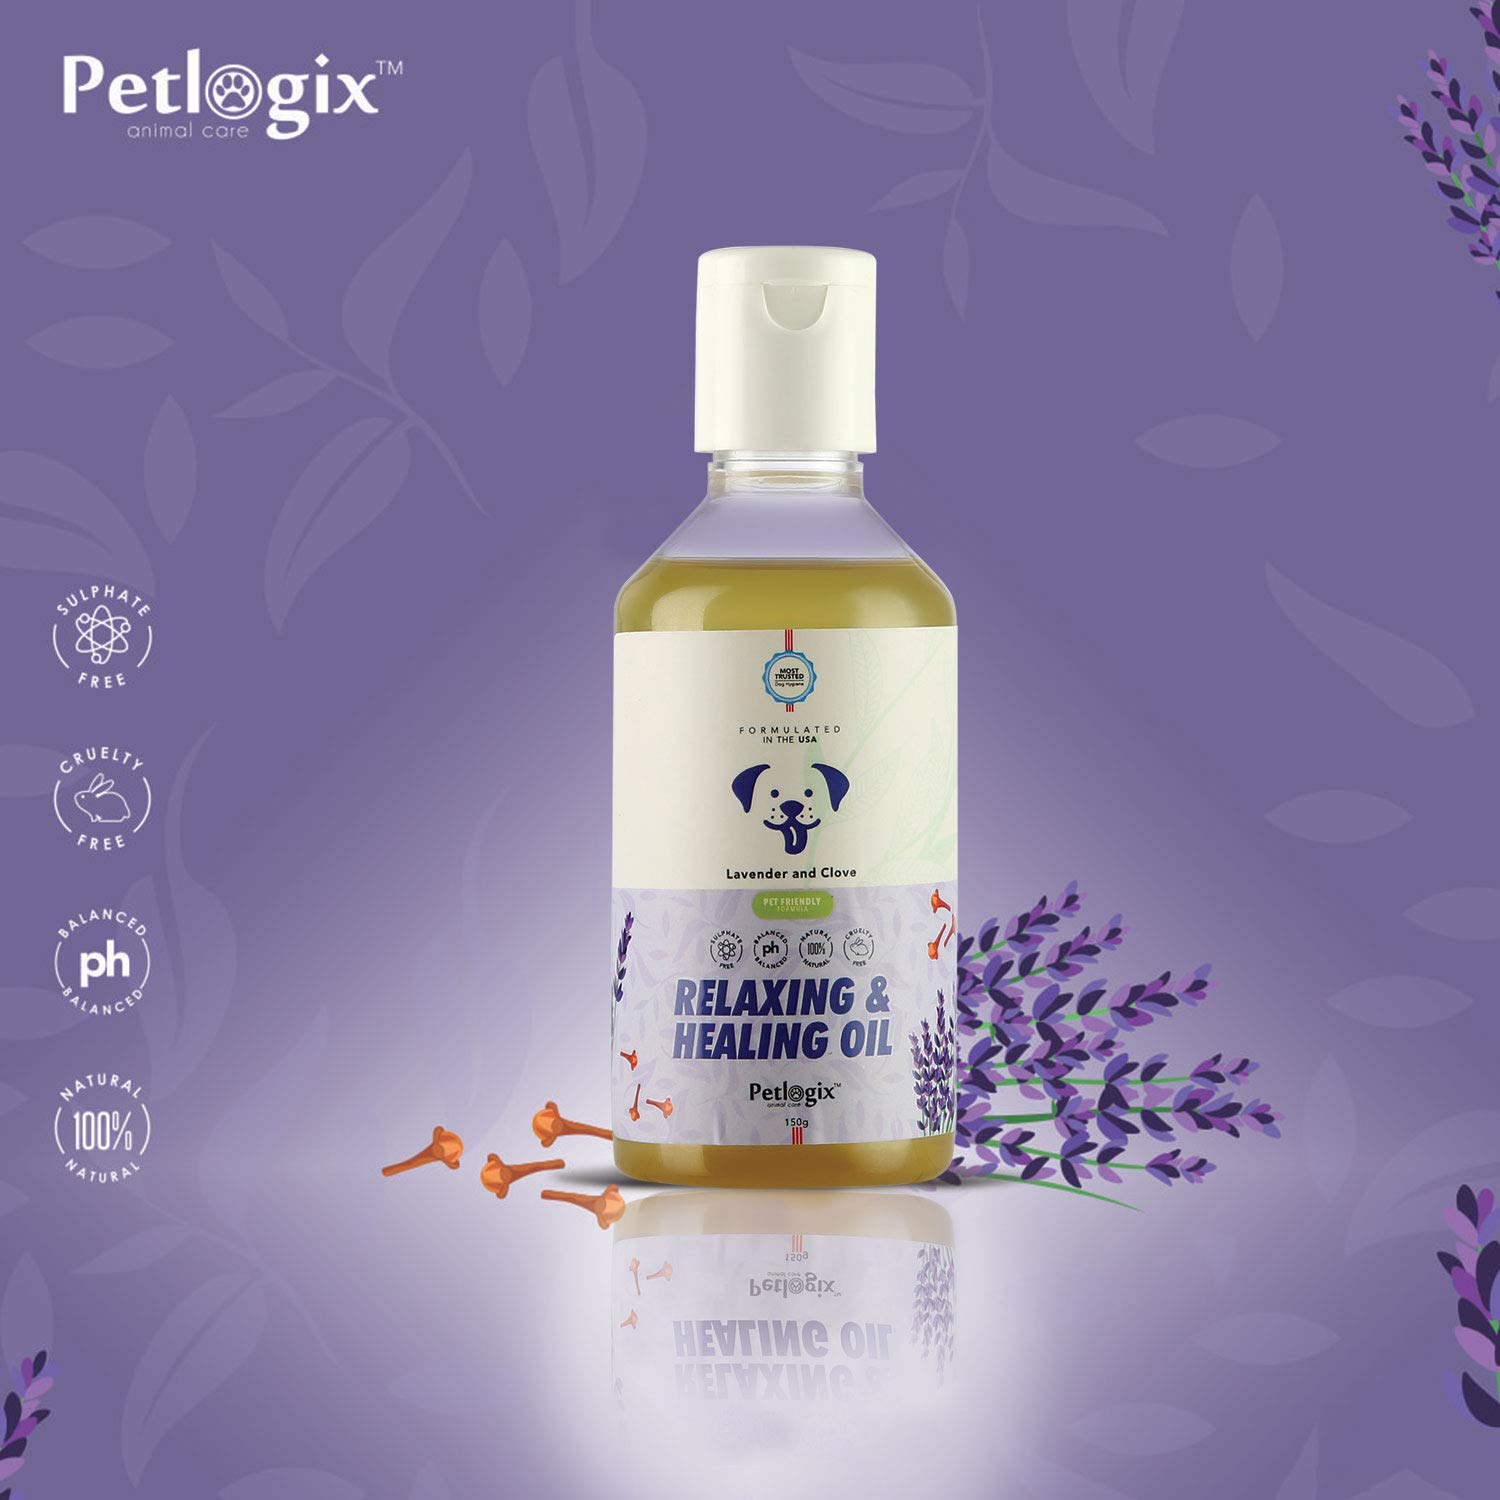 Petlogix Natural Relaxing & Healing Oil